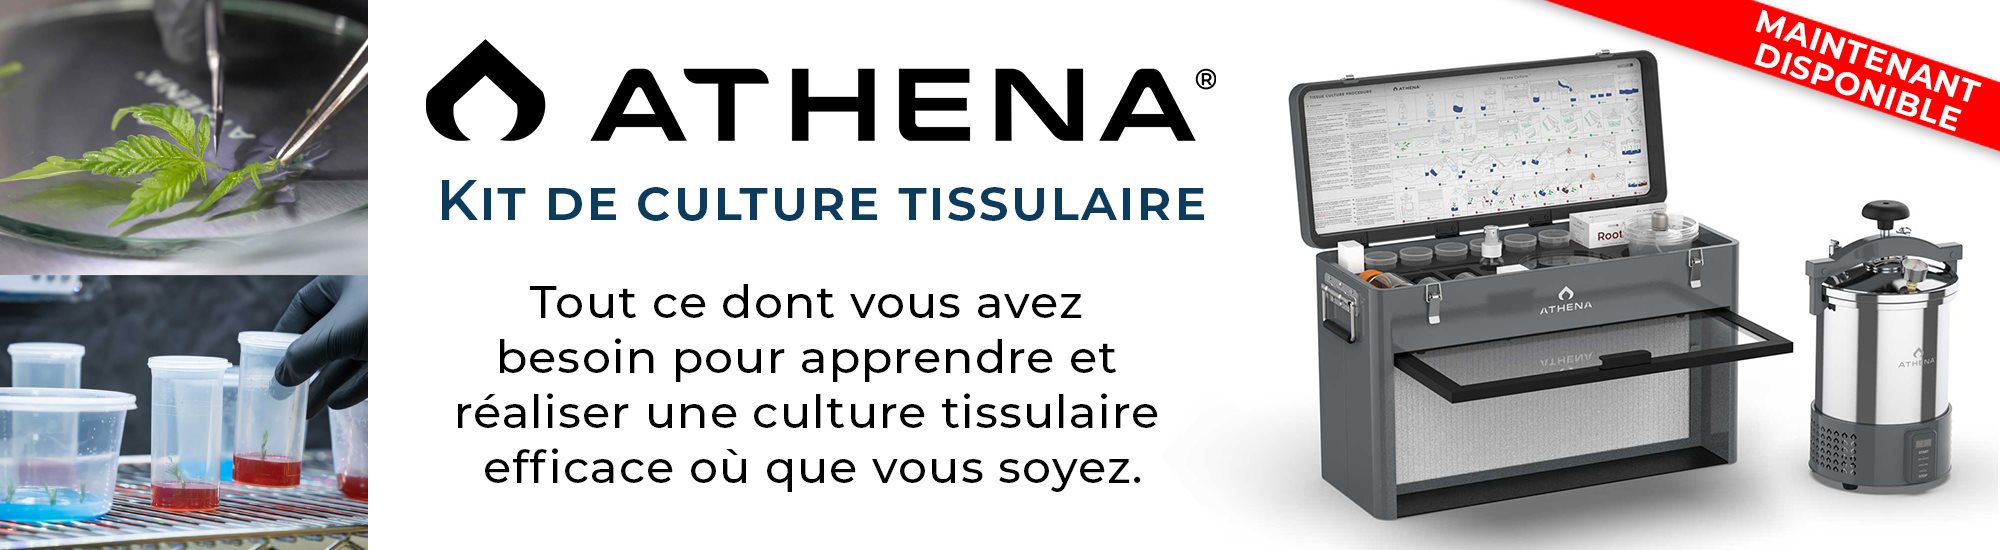 ATHENA TISSUE CULTURE - banner_fr